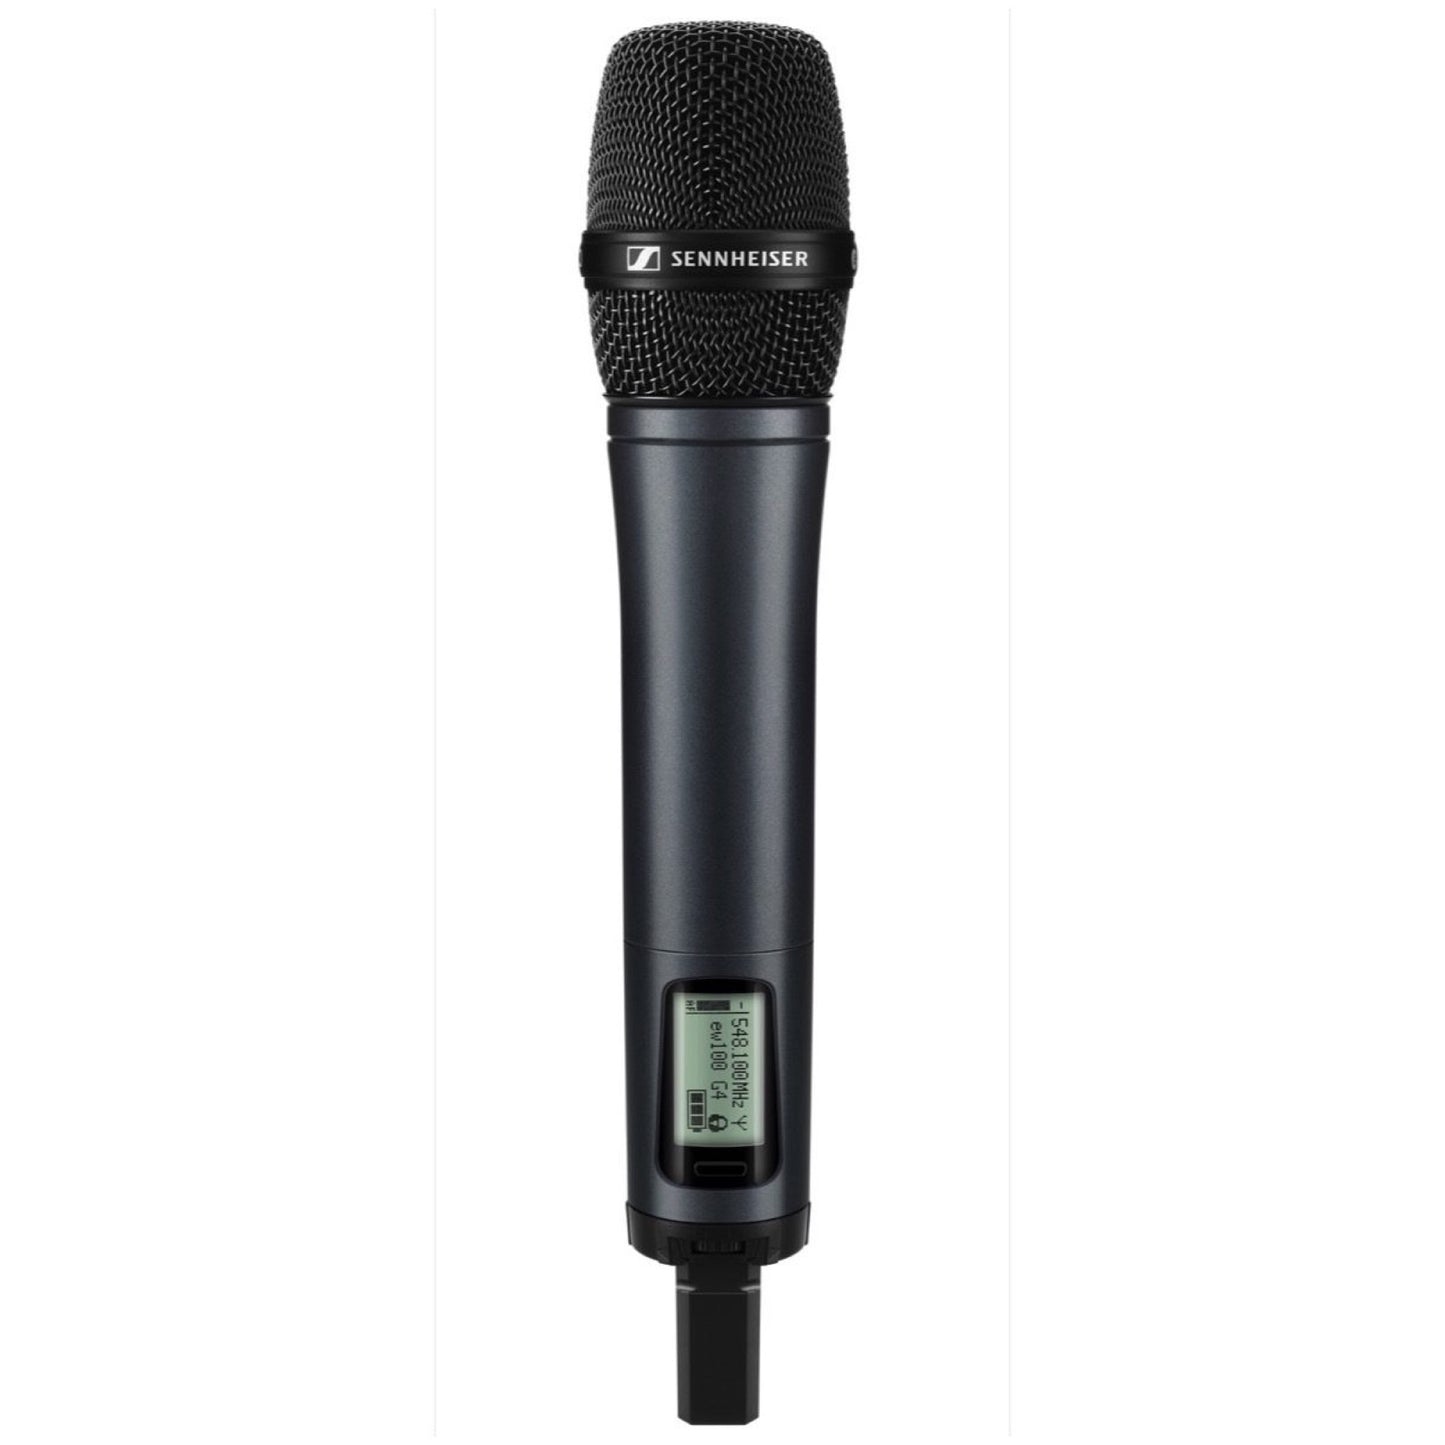 Sennheiser ew100 G4 e945 Vocal Wireless Microphone System, Band A (516-558 MHz)